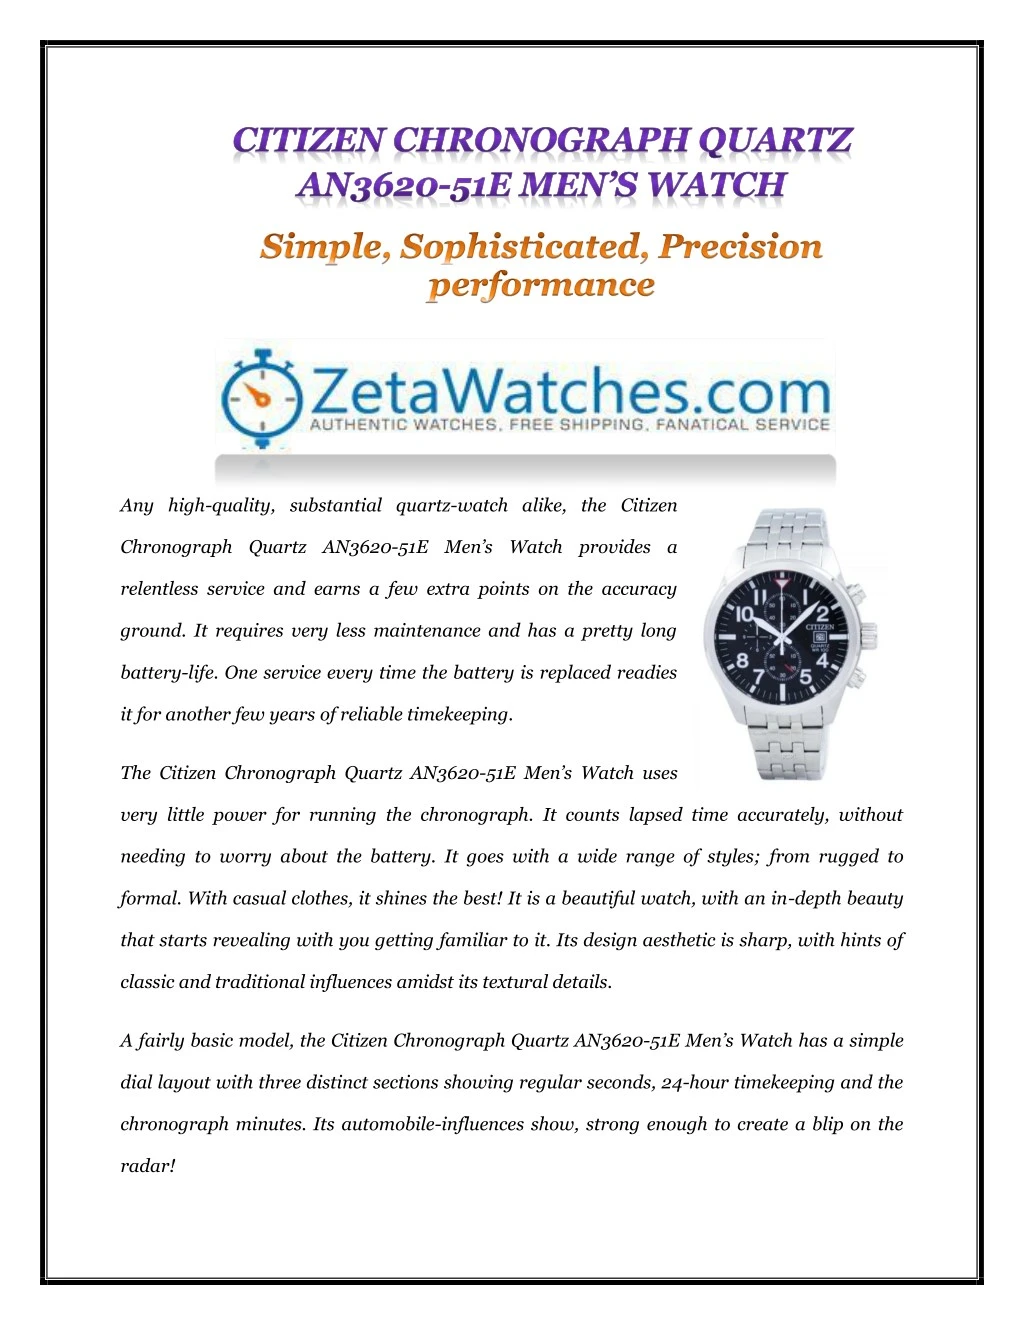 any high quality substantial quartz watch alike